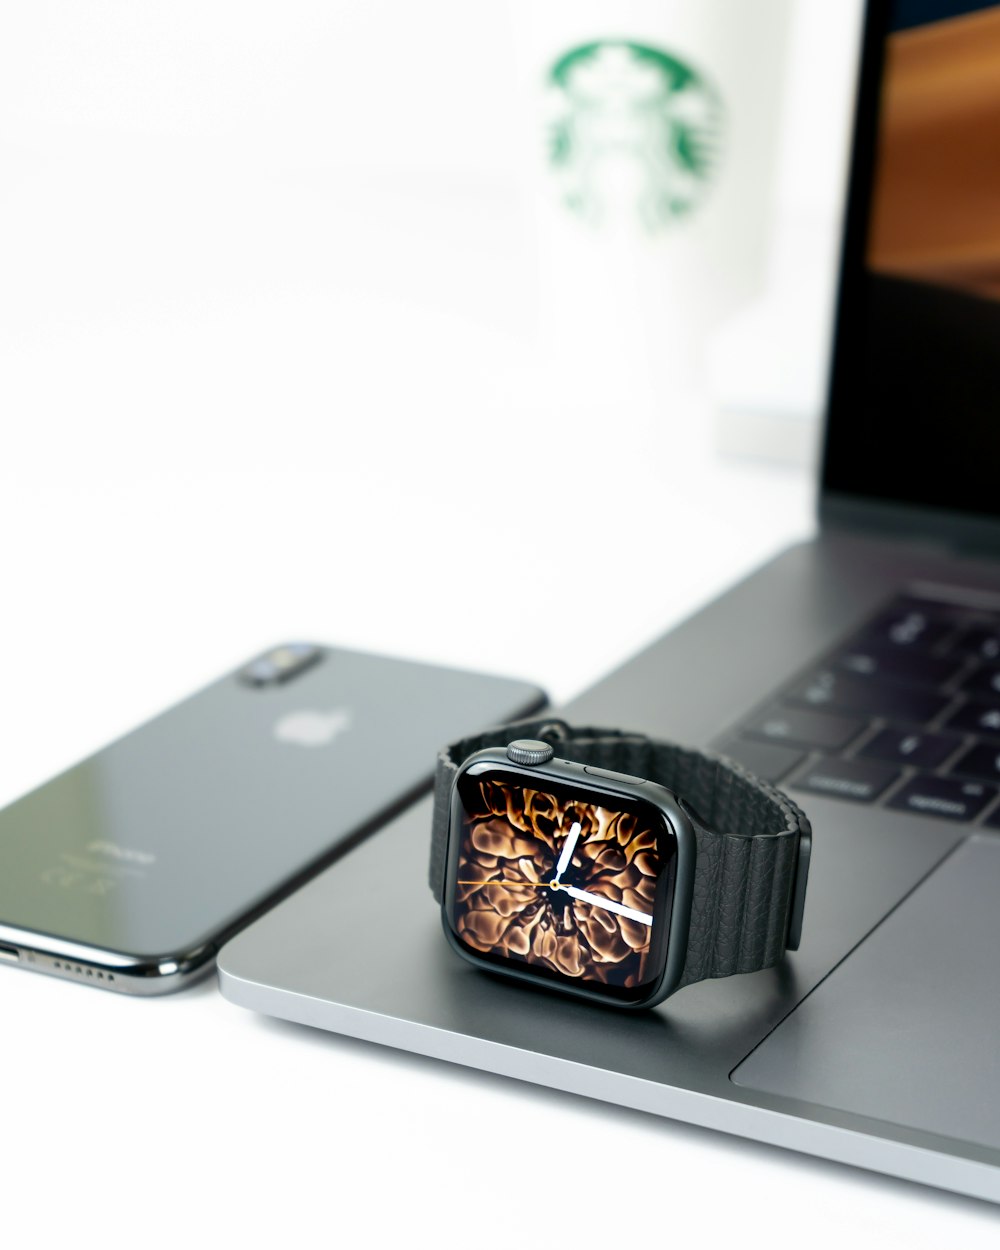 Apple Watch on laptop beside iPhone X